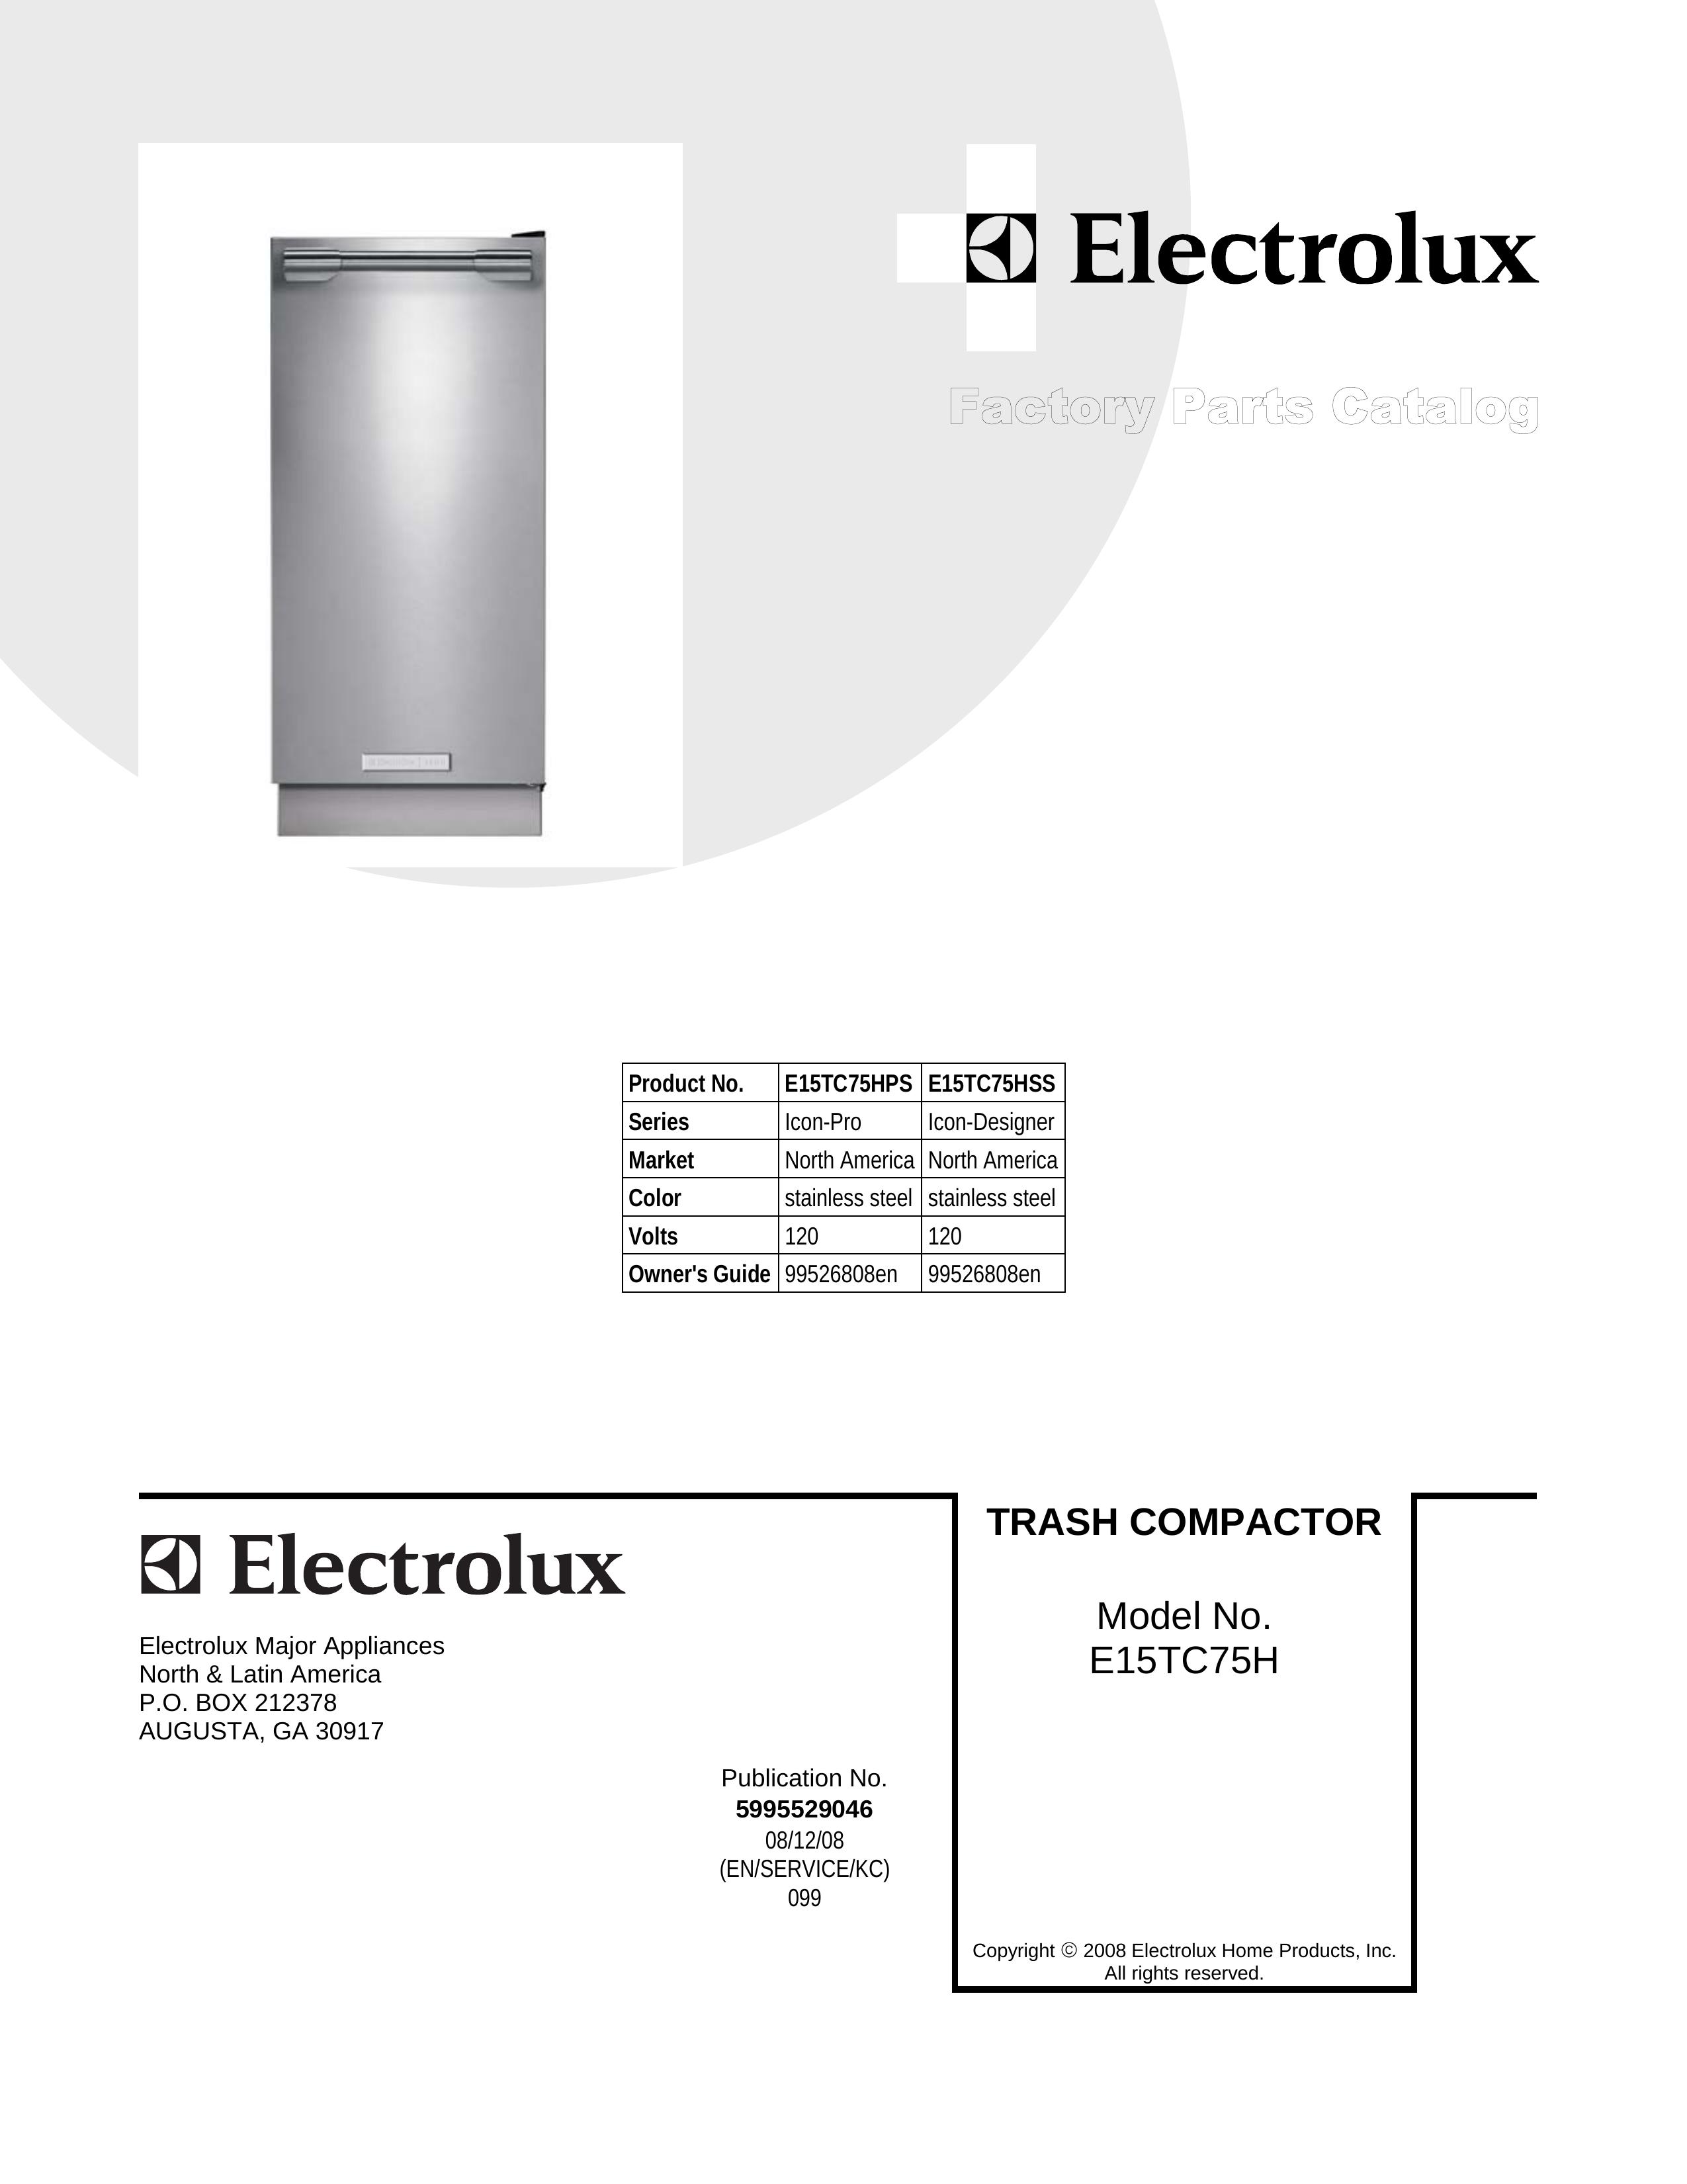 Electrolux E15TC75HPS Trash Compactor User Manual